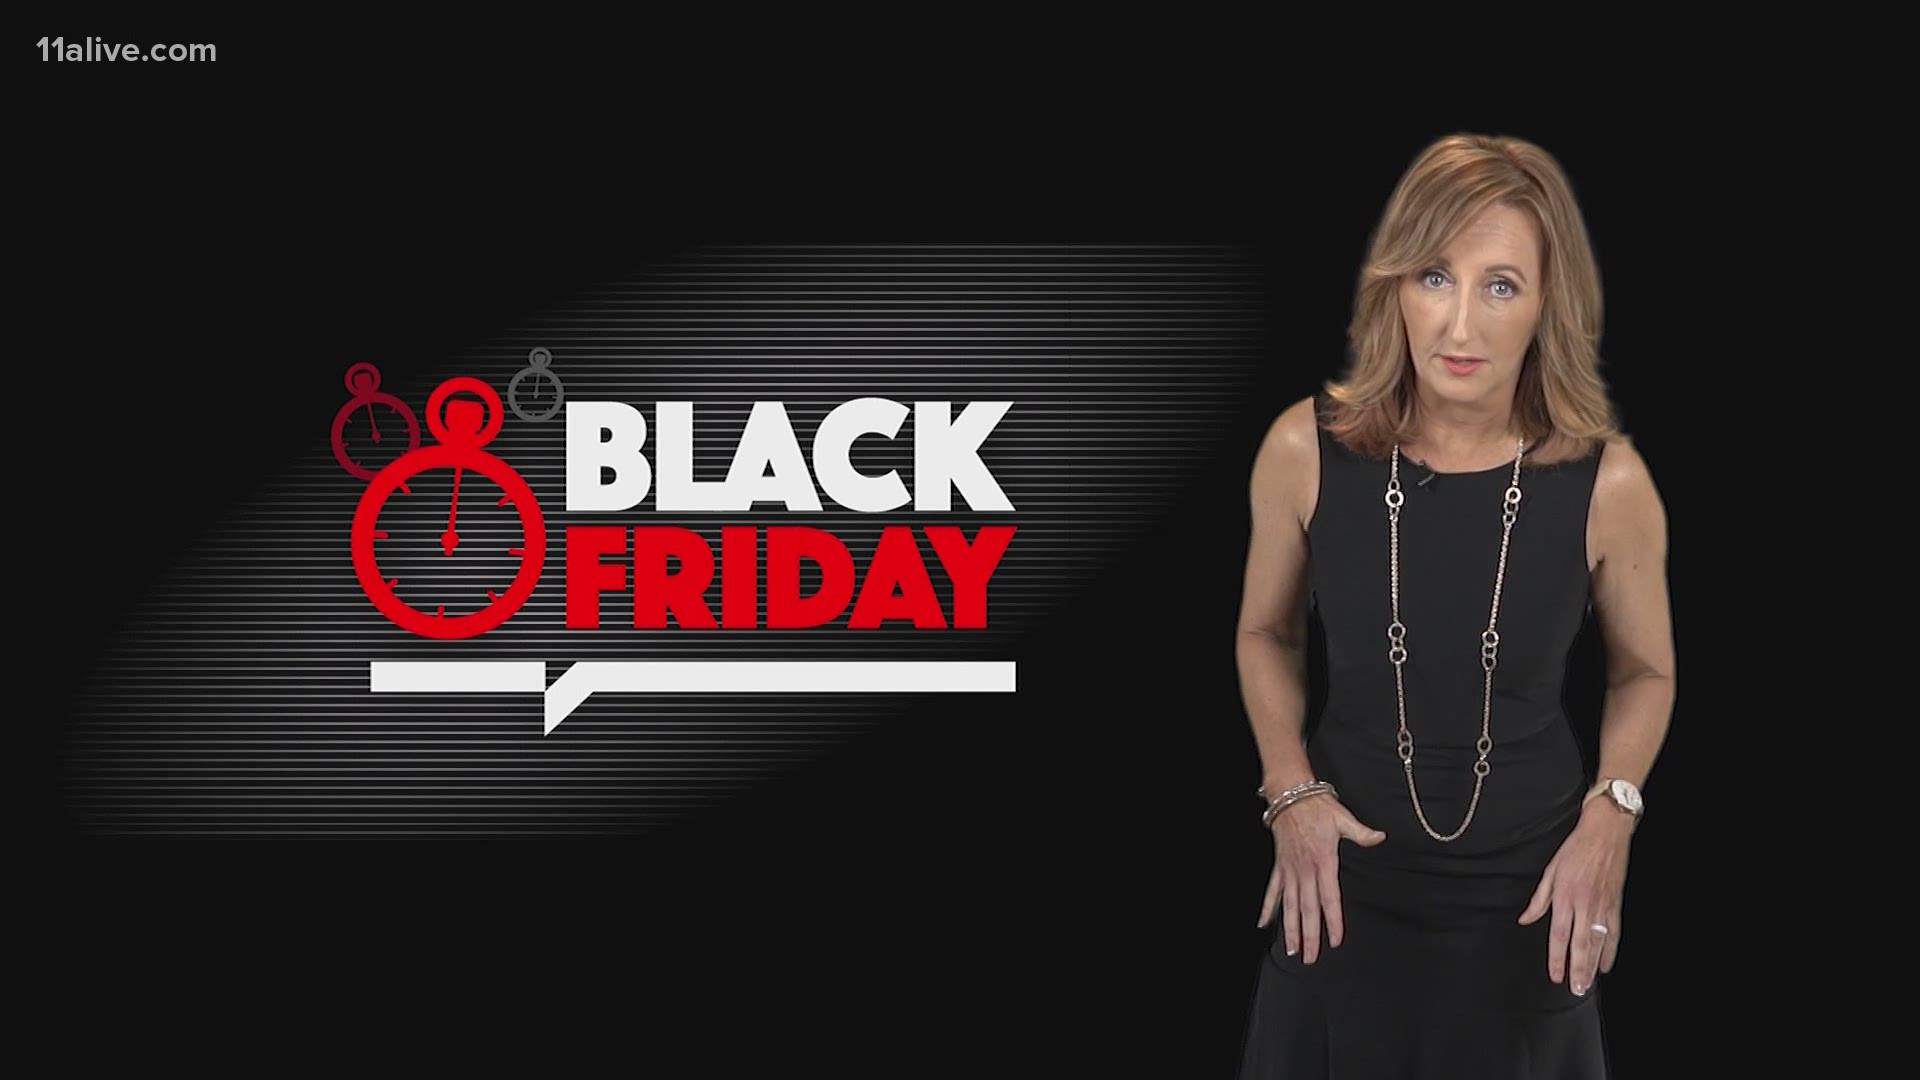 Target Black Friday ad 2020 deals kick off Sunday | 0